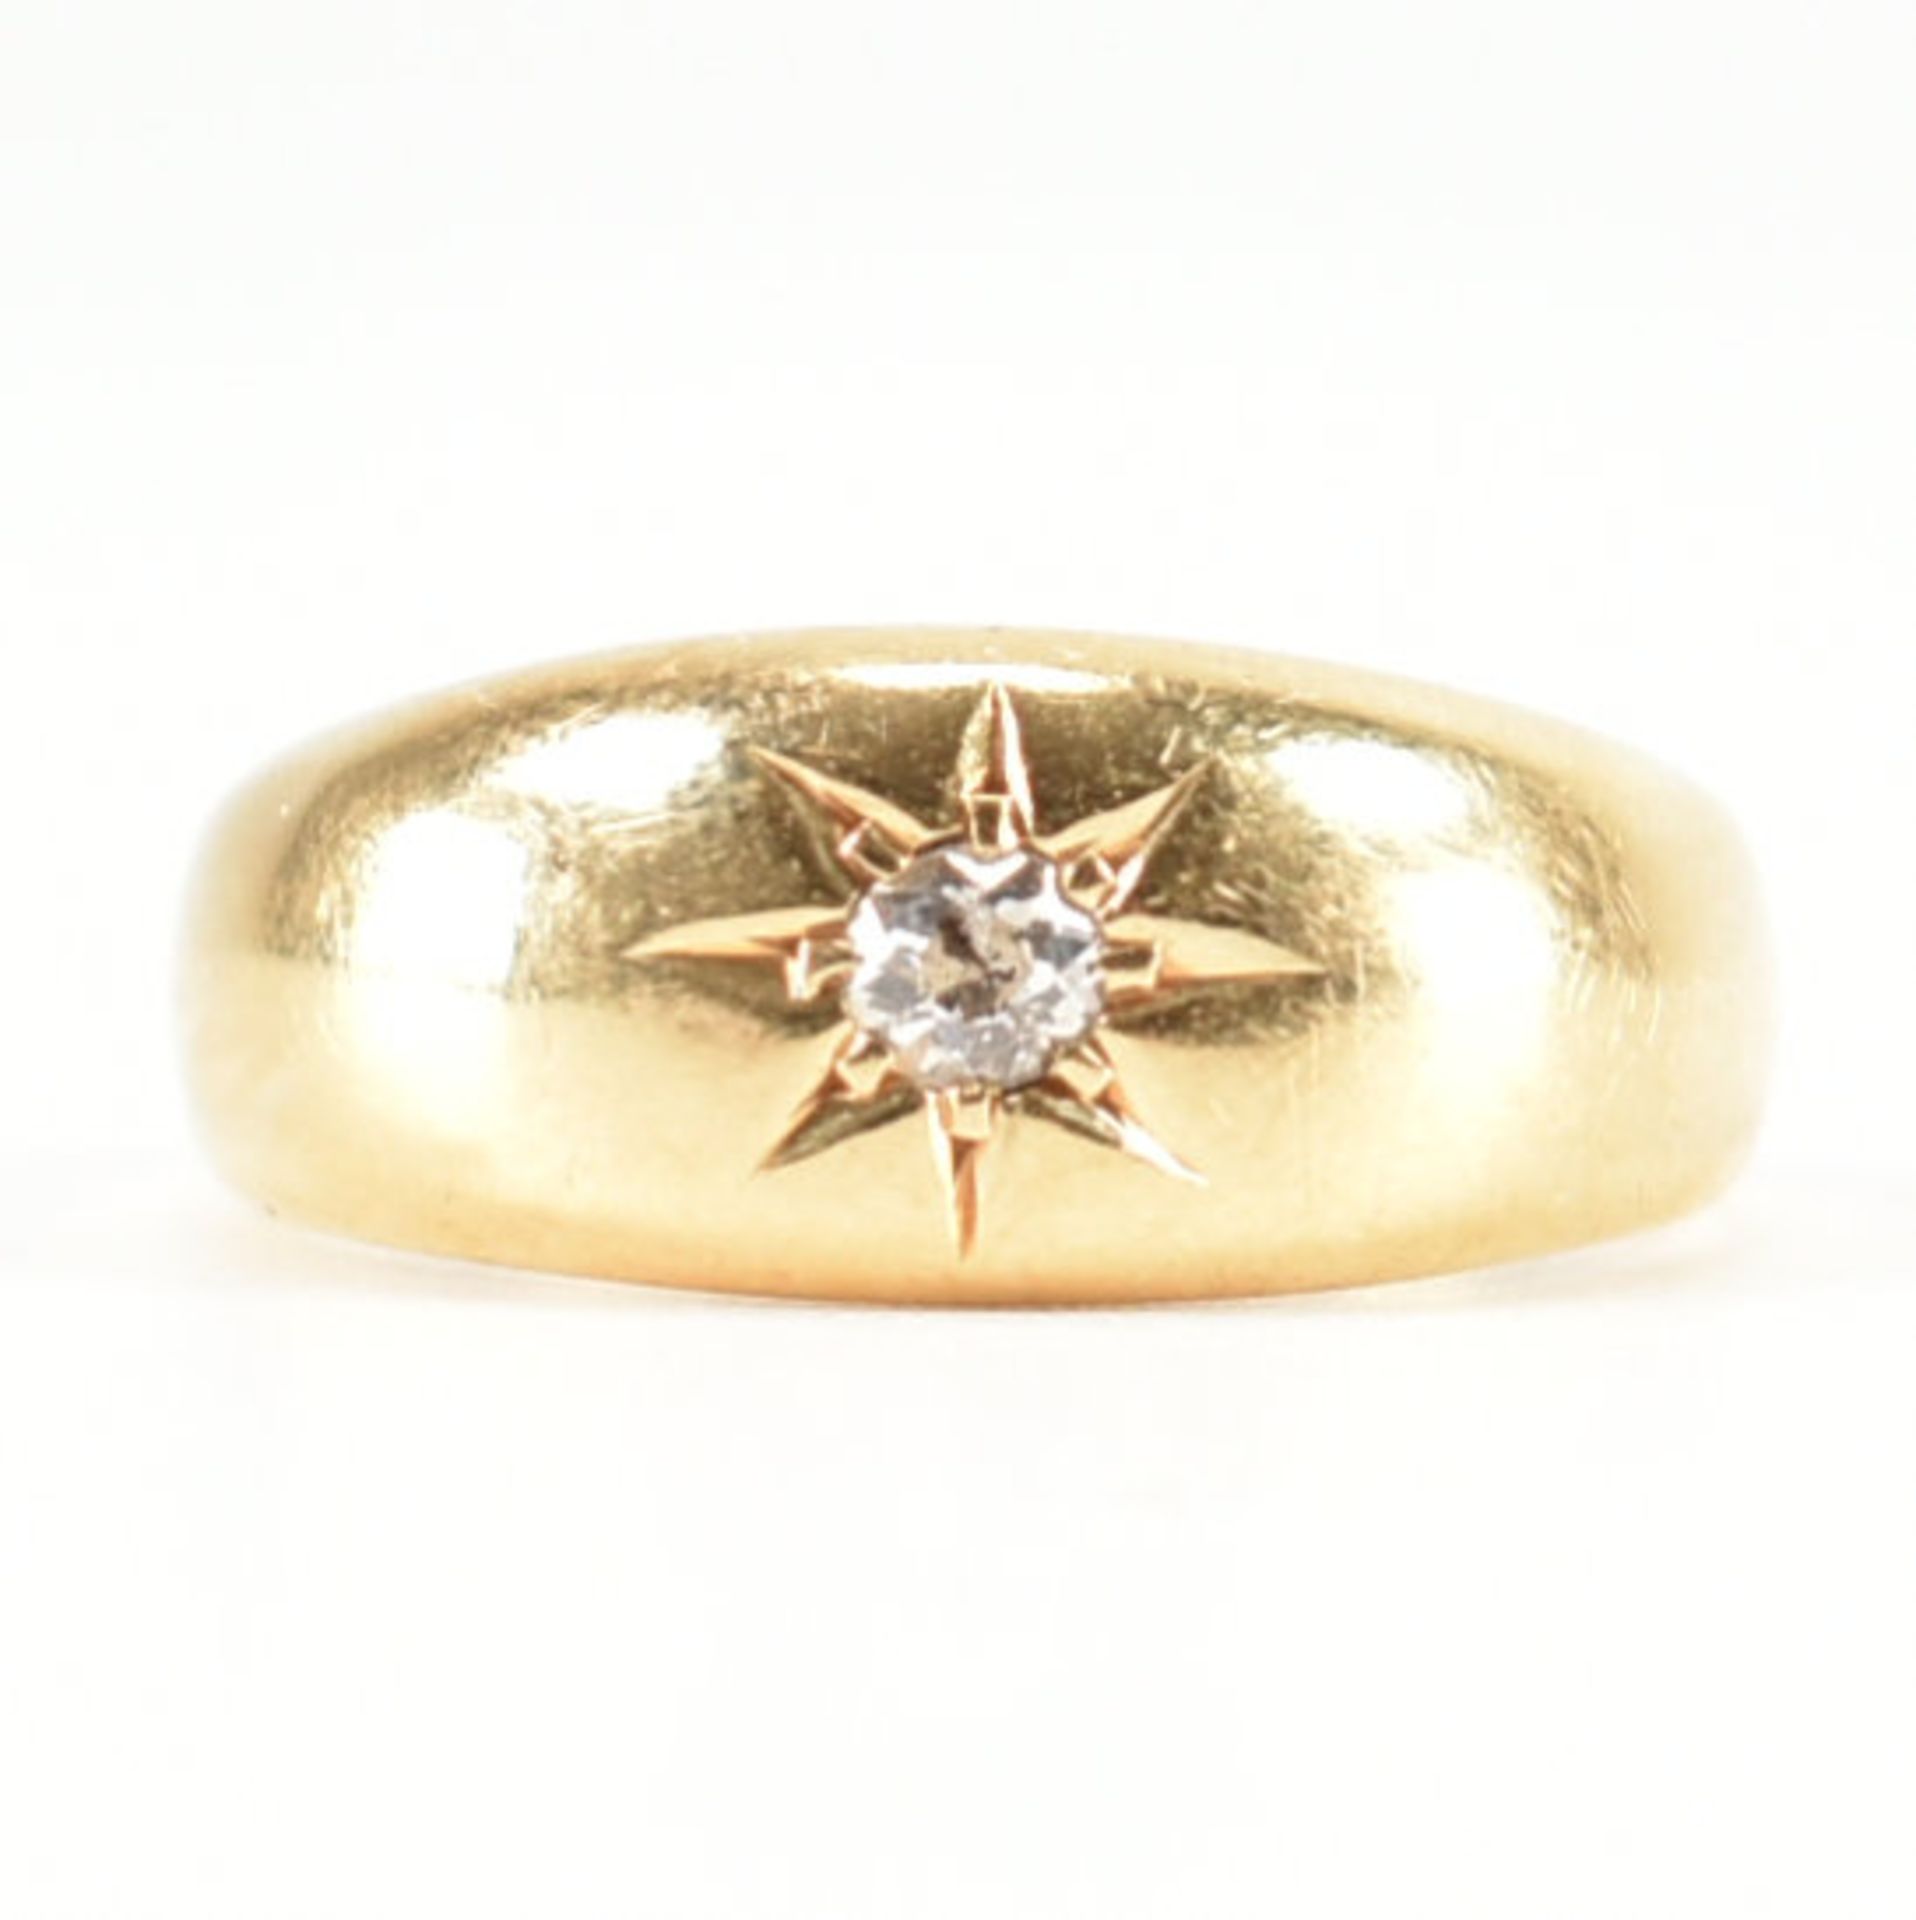 HALLMARKED 18CT GOLD & DIAMOND SINGLE STONE RING - Image 2 of 9